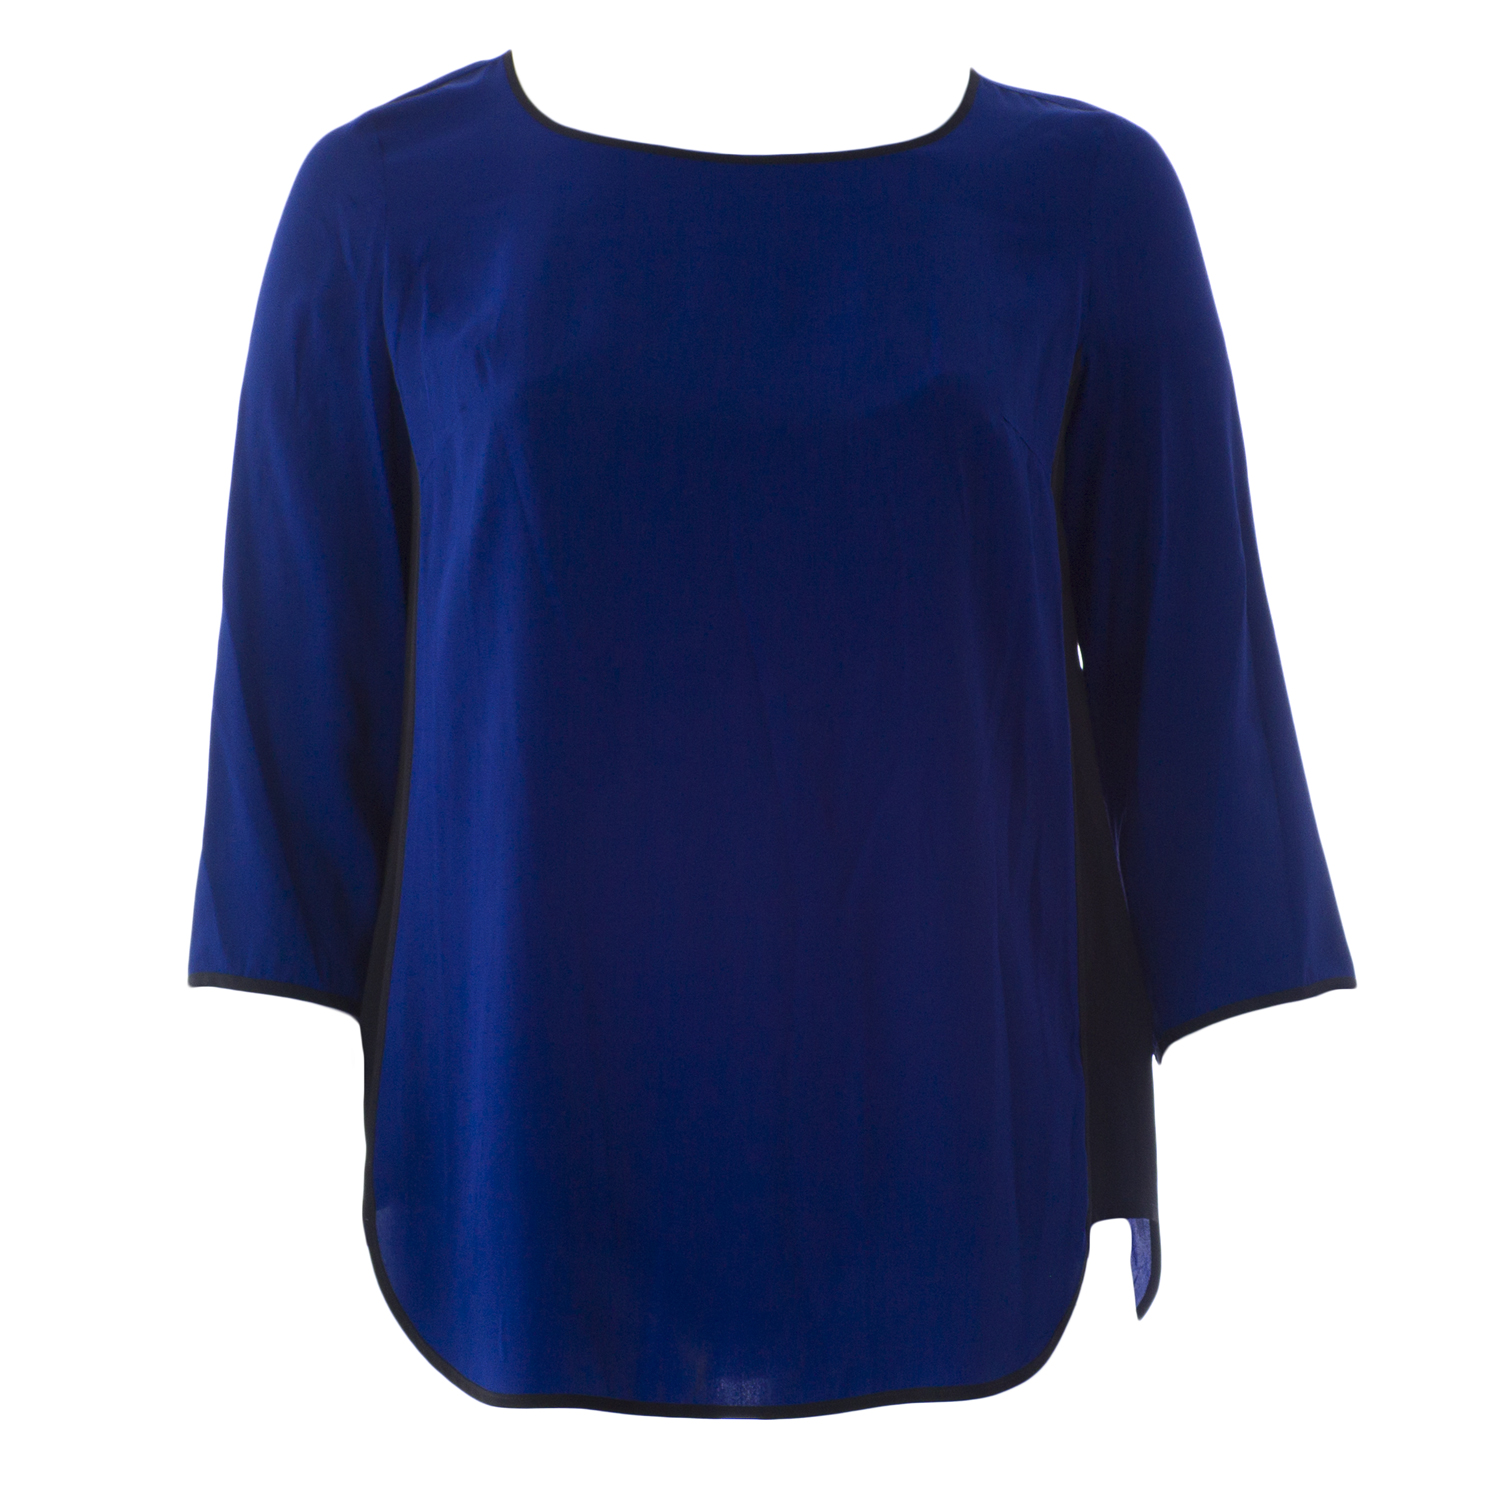 MARINA RINALDI Women's Barbara 3/4 Sleeve Blouse $285 NWT | eBay